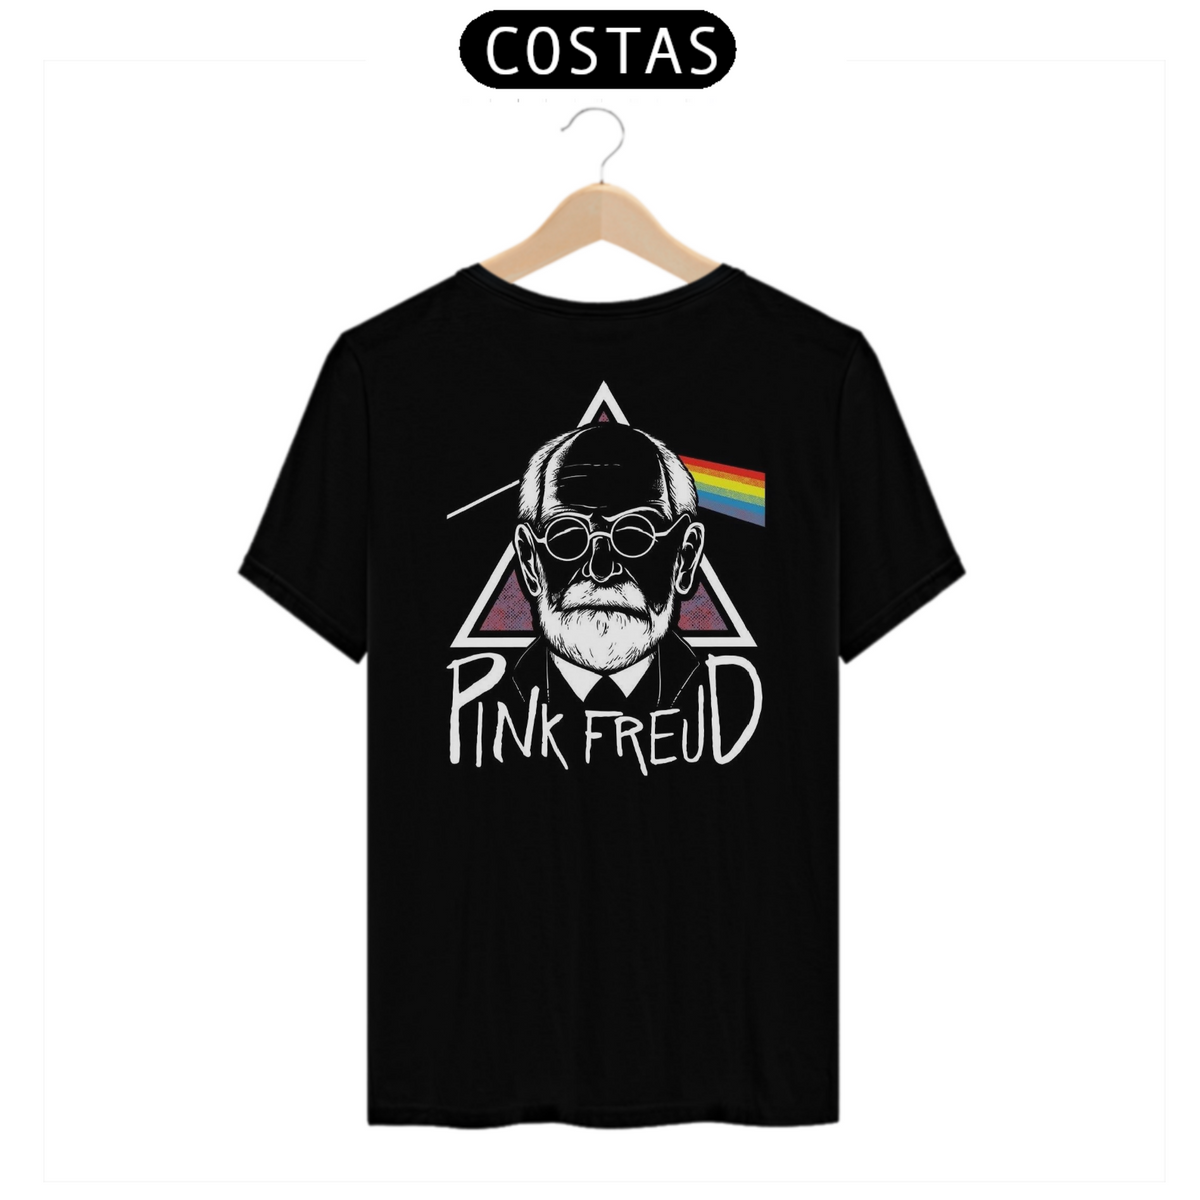 Nome do produto: T-shirt Pink Freud